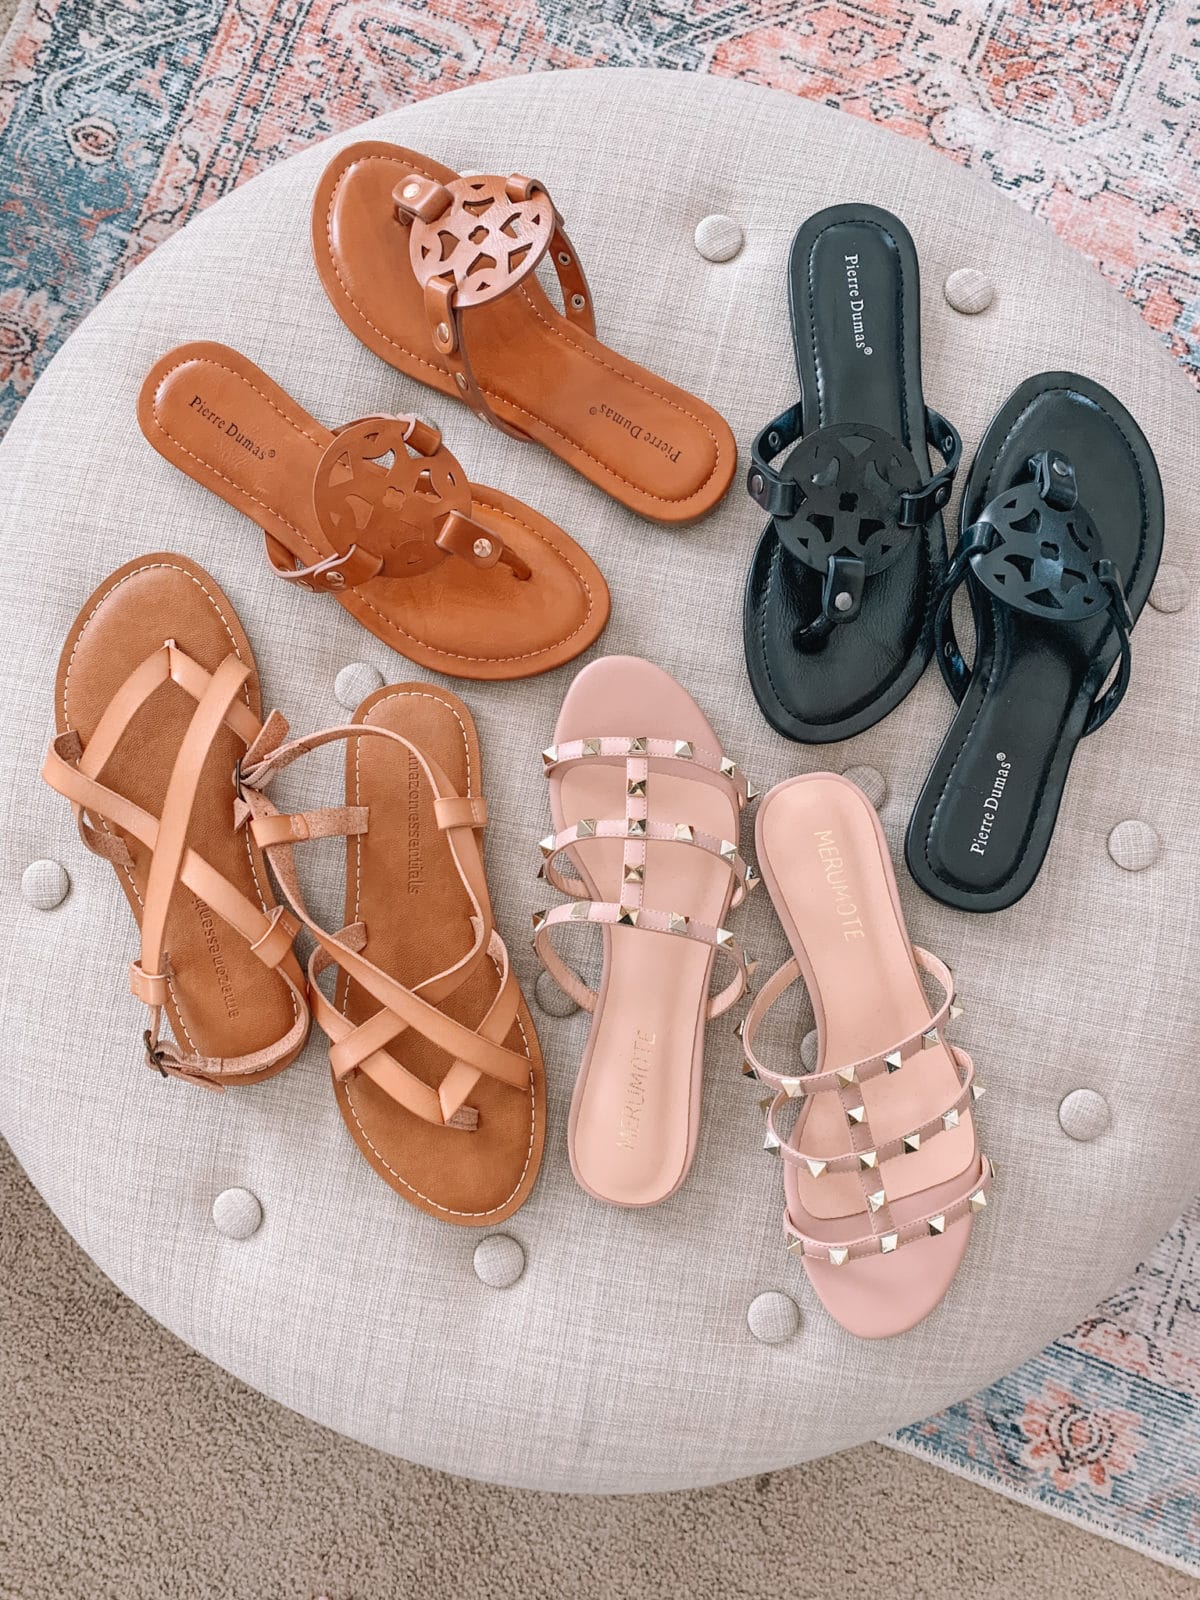 Amazon Fashion Faves, Sandals 